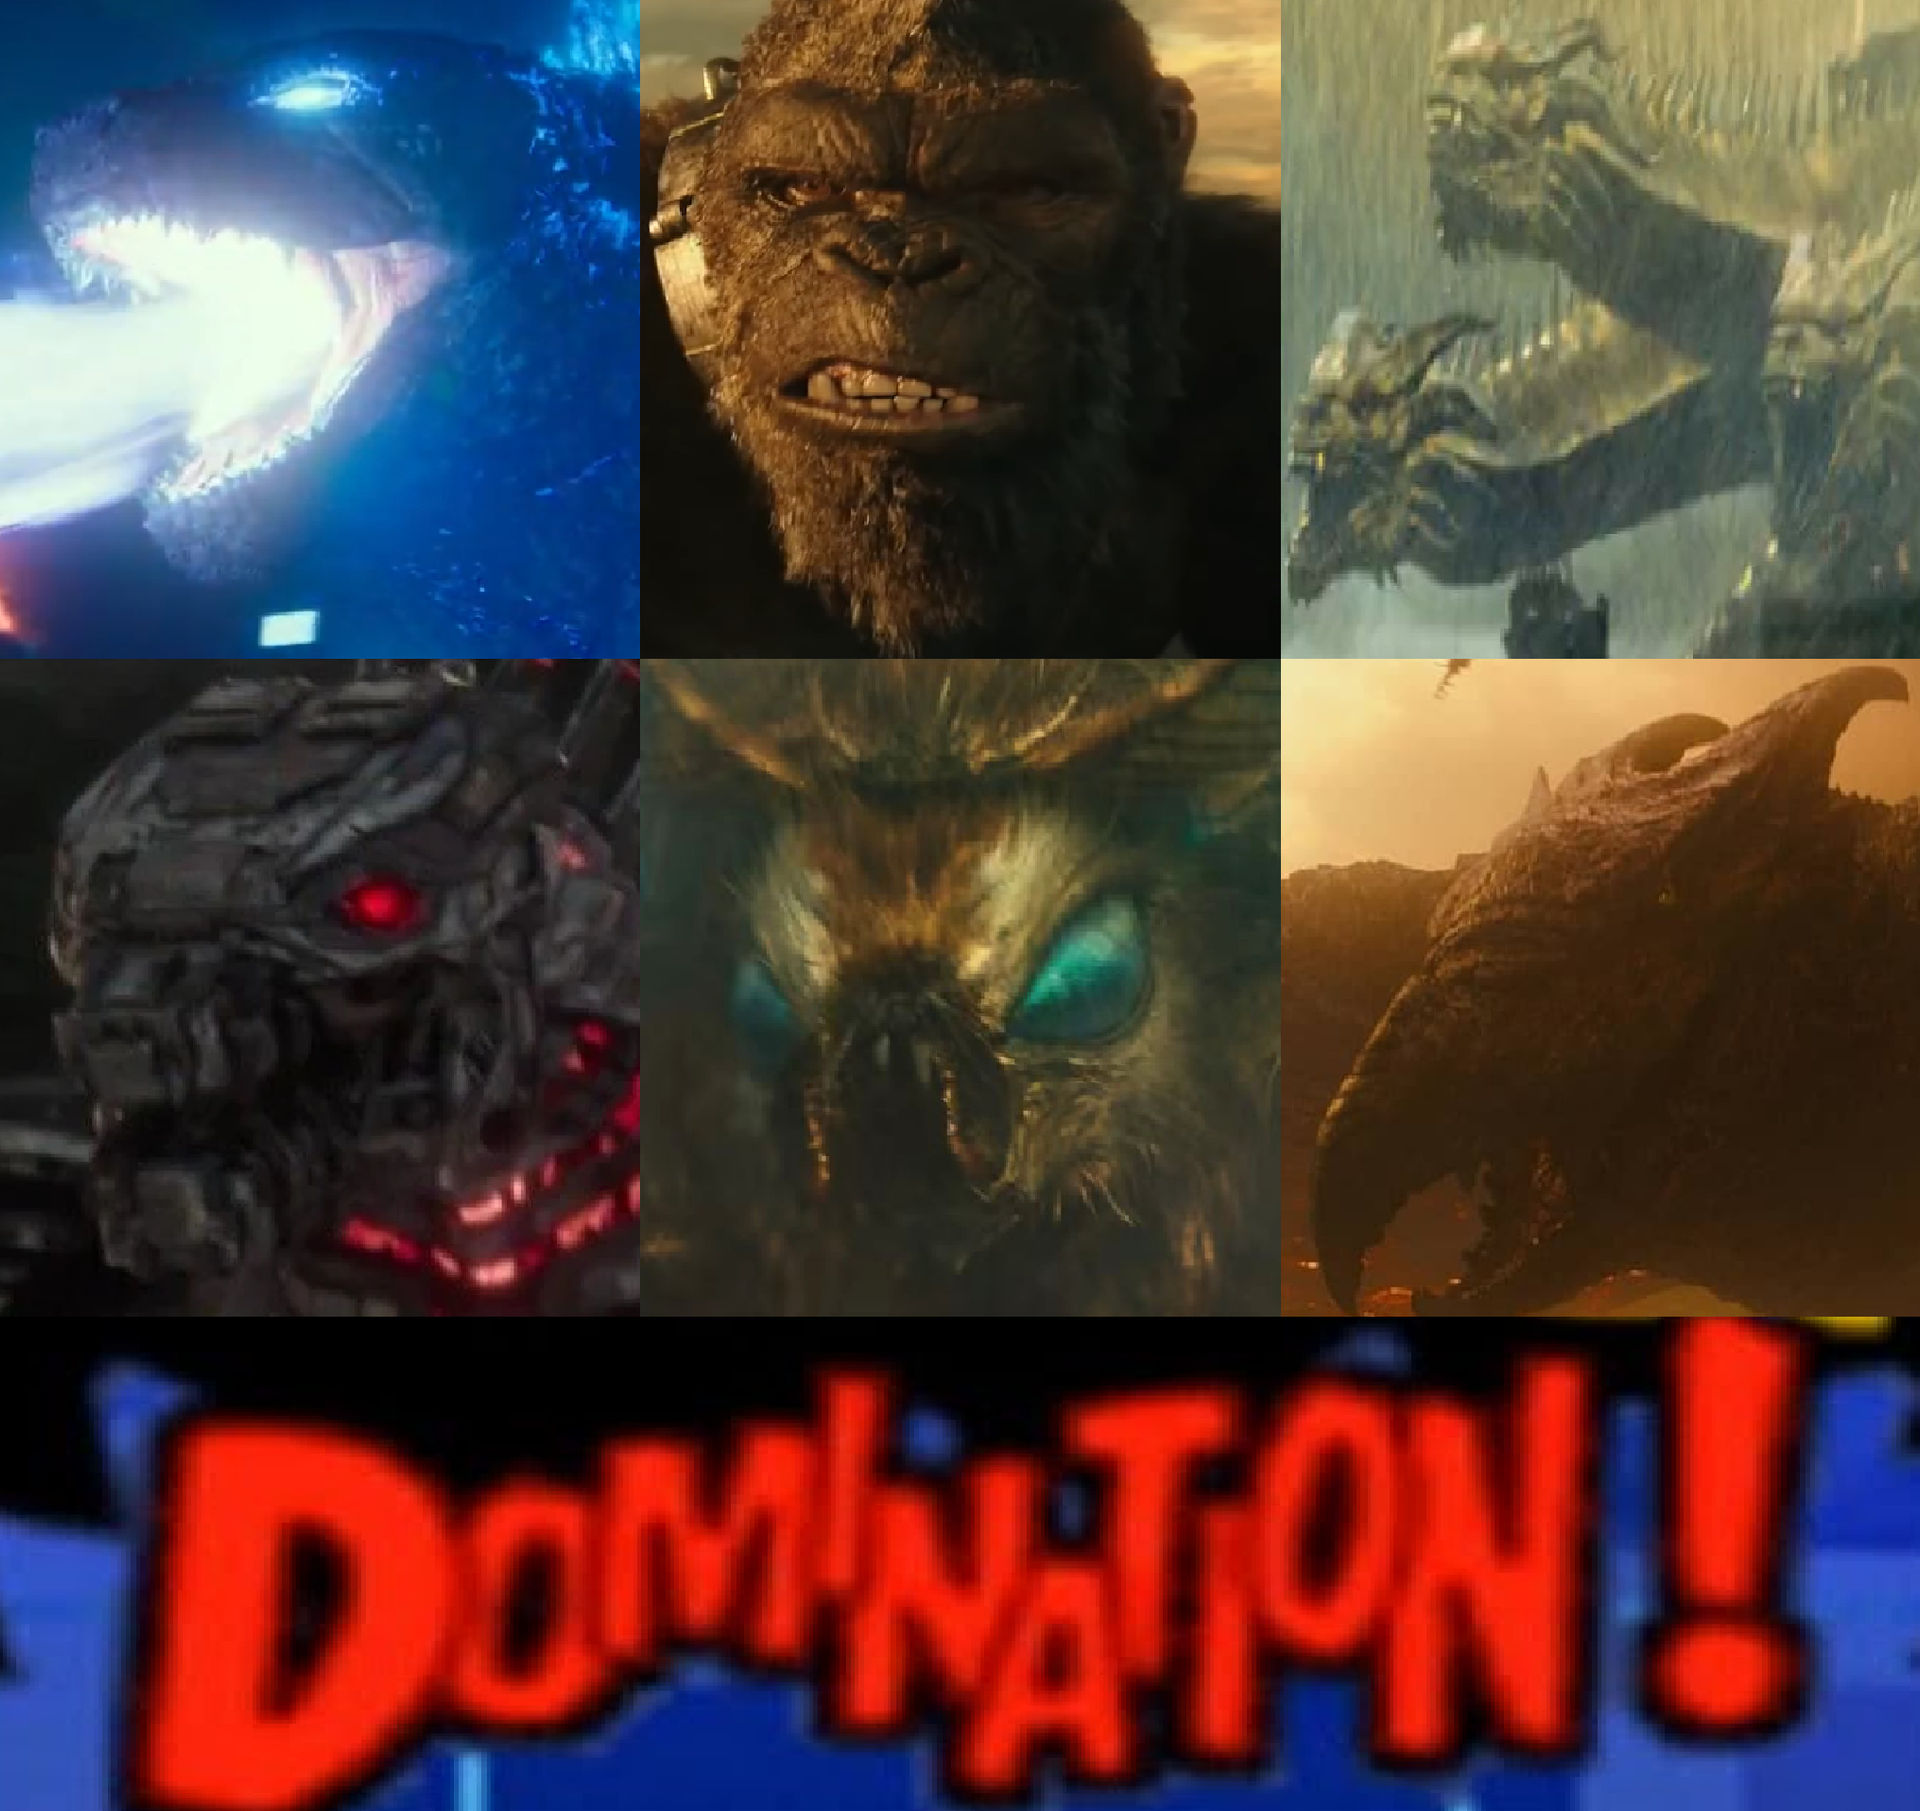 Godzilla is Gonna Cry by MnstrFrc on DeviantArt